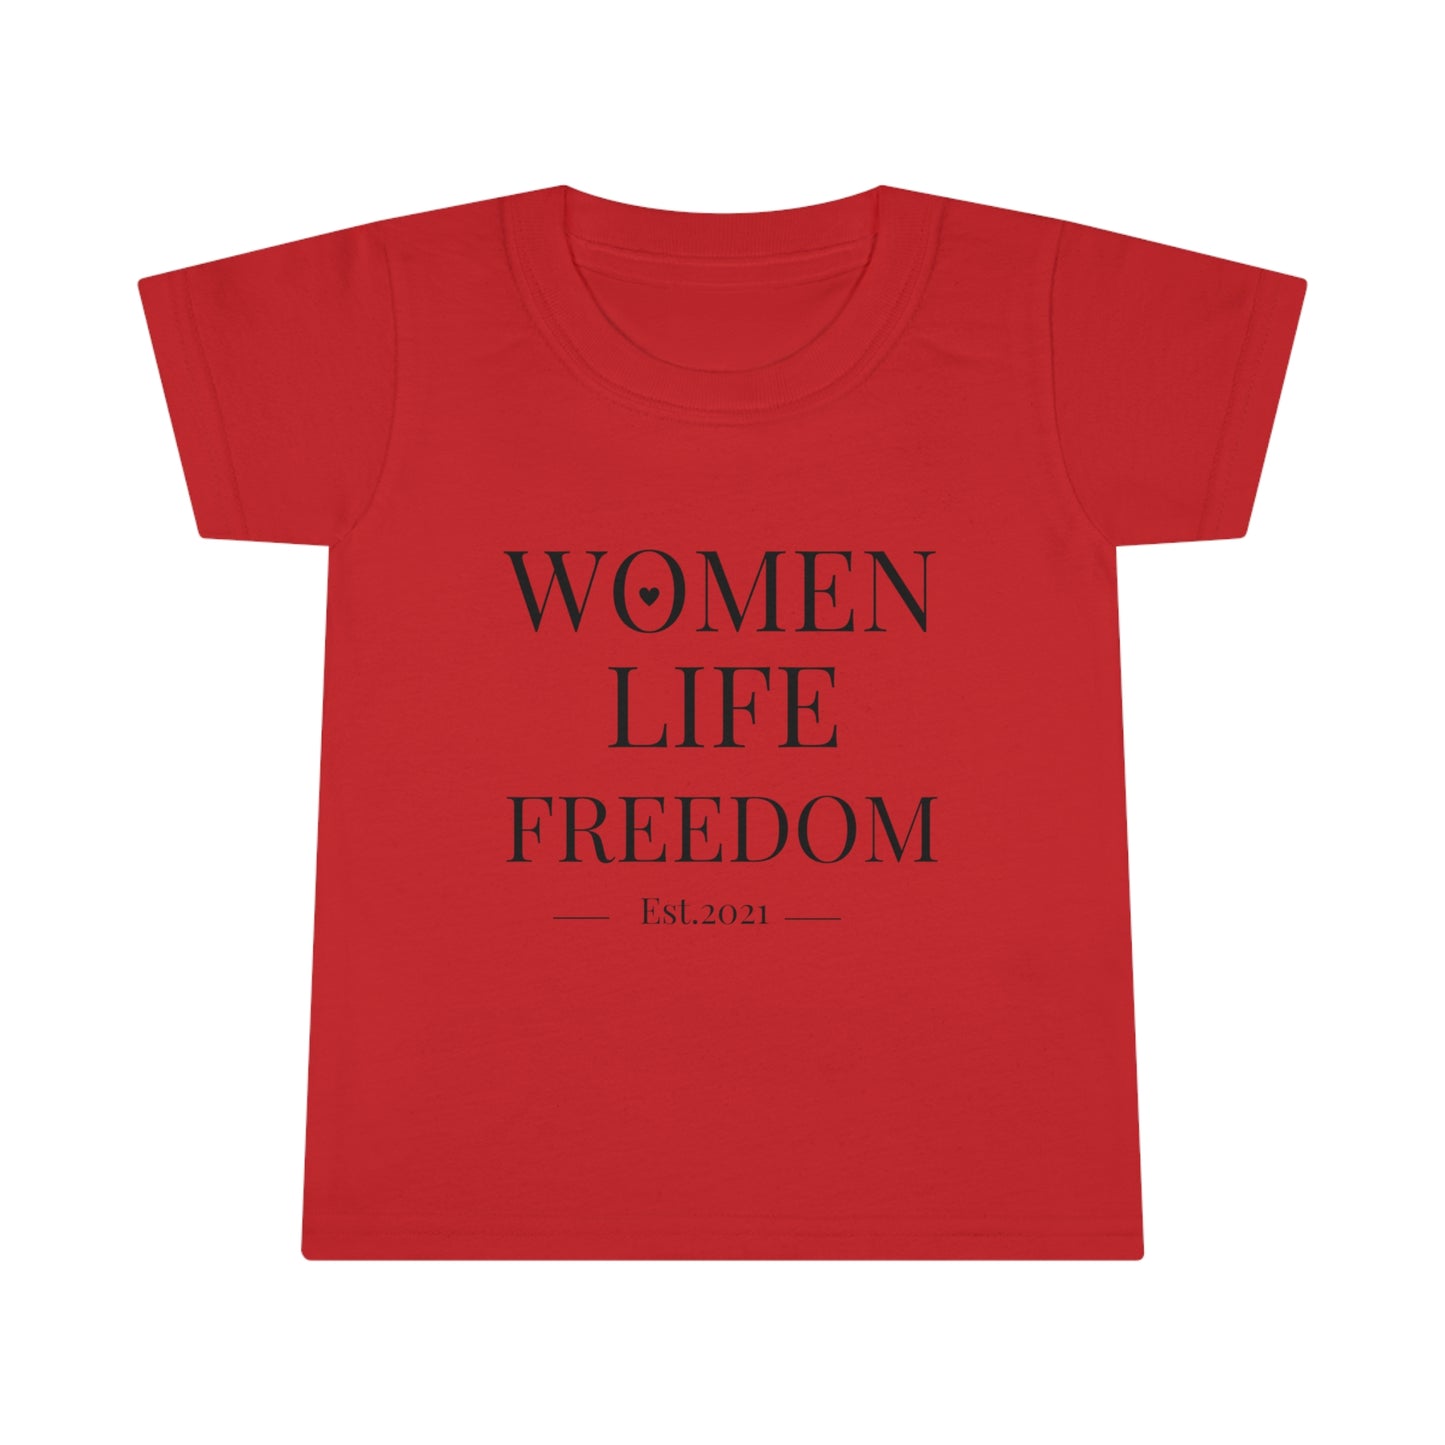 Women Life Freedom - Toddler T-shirt